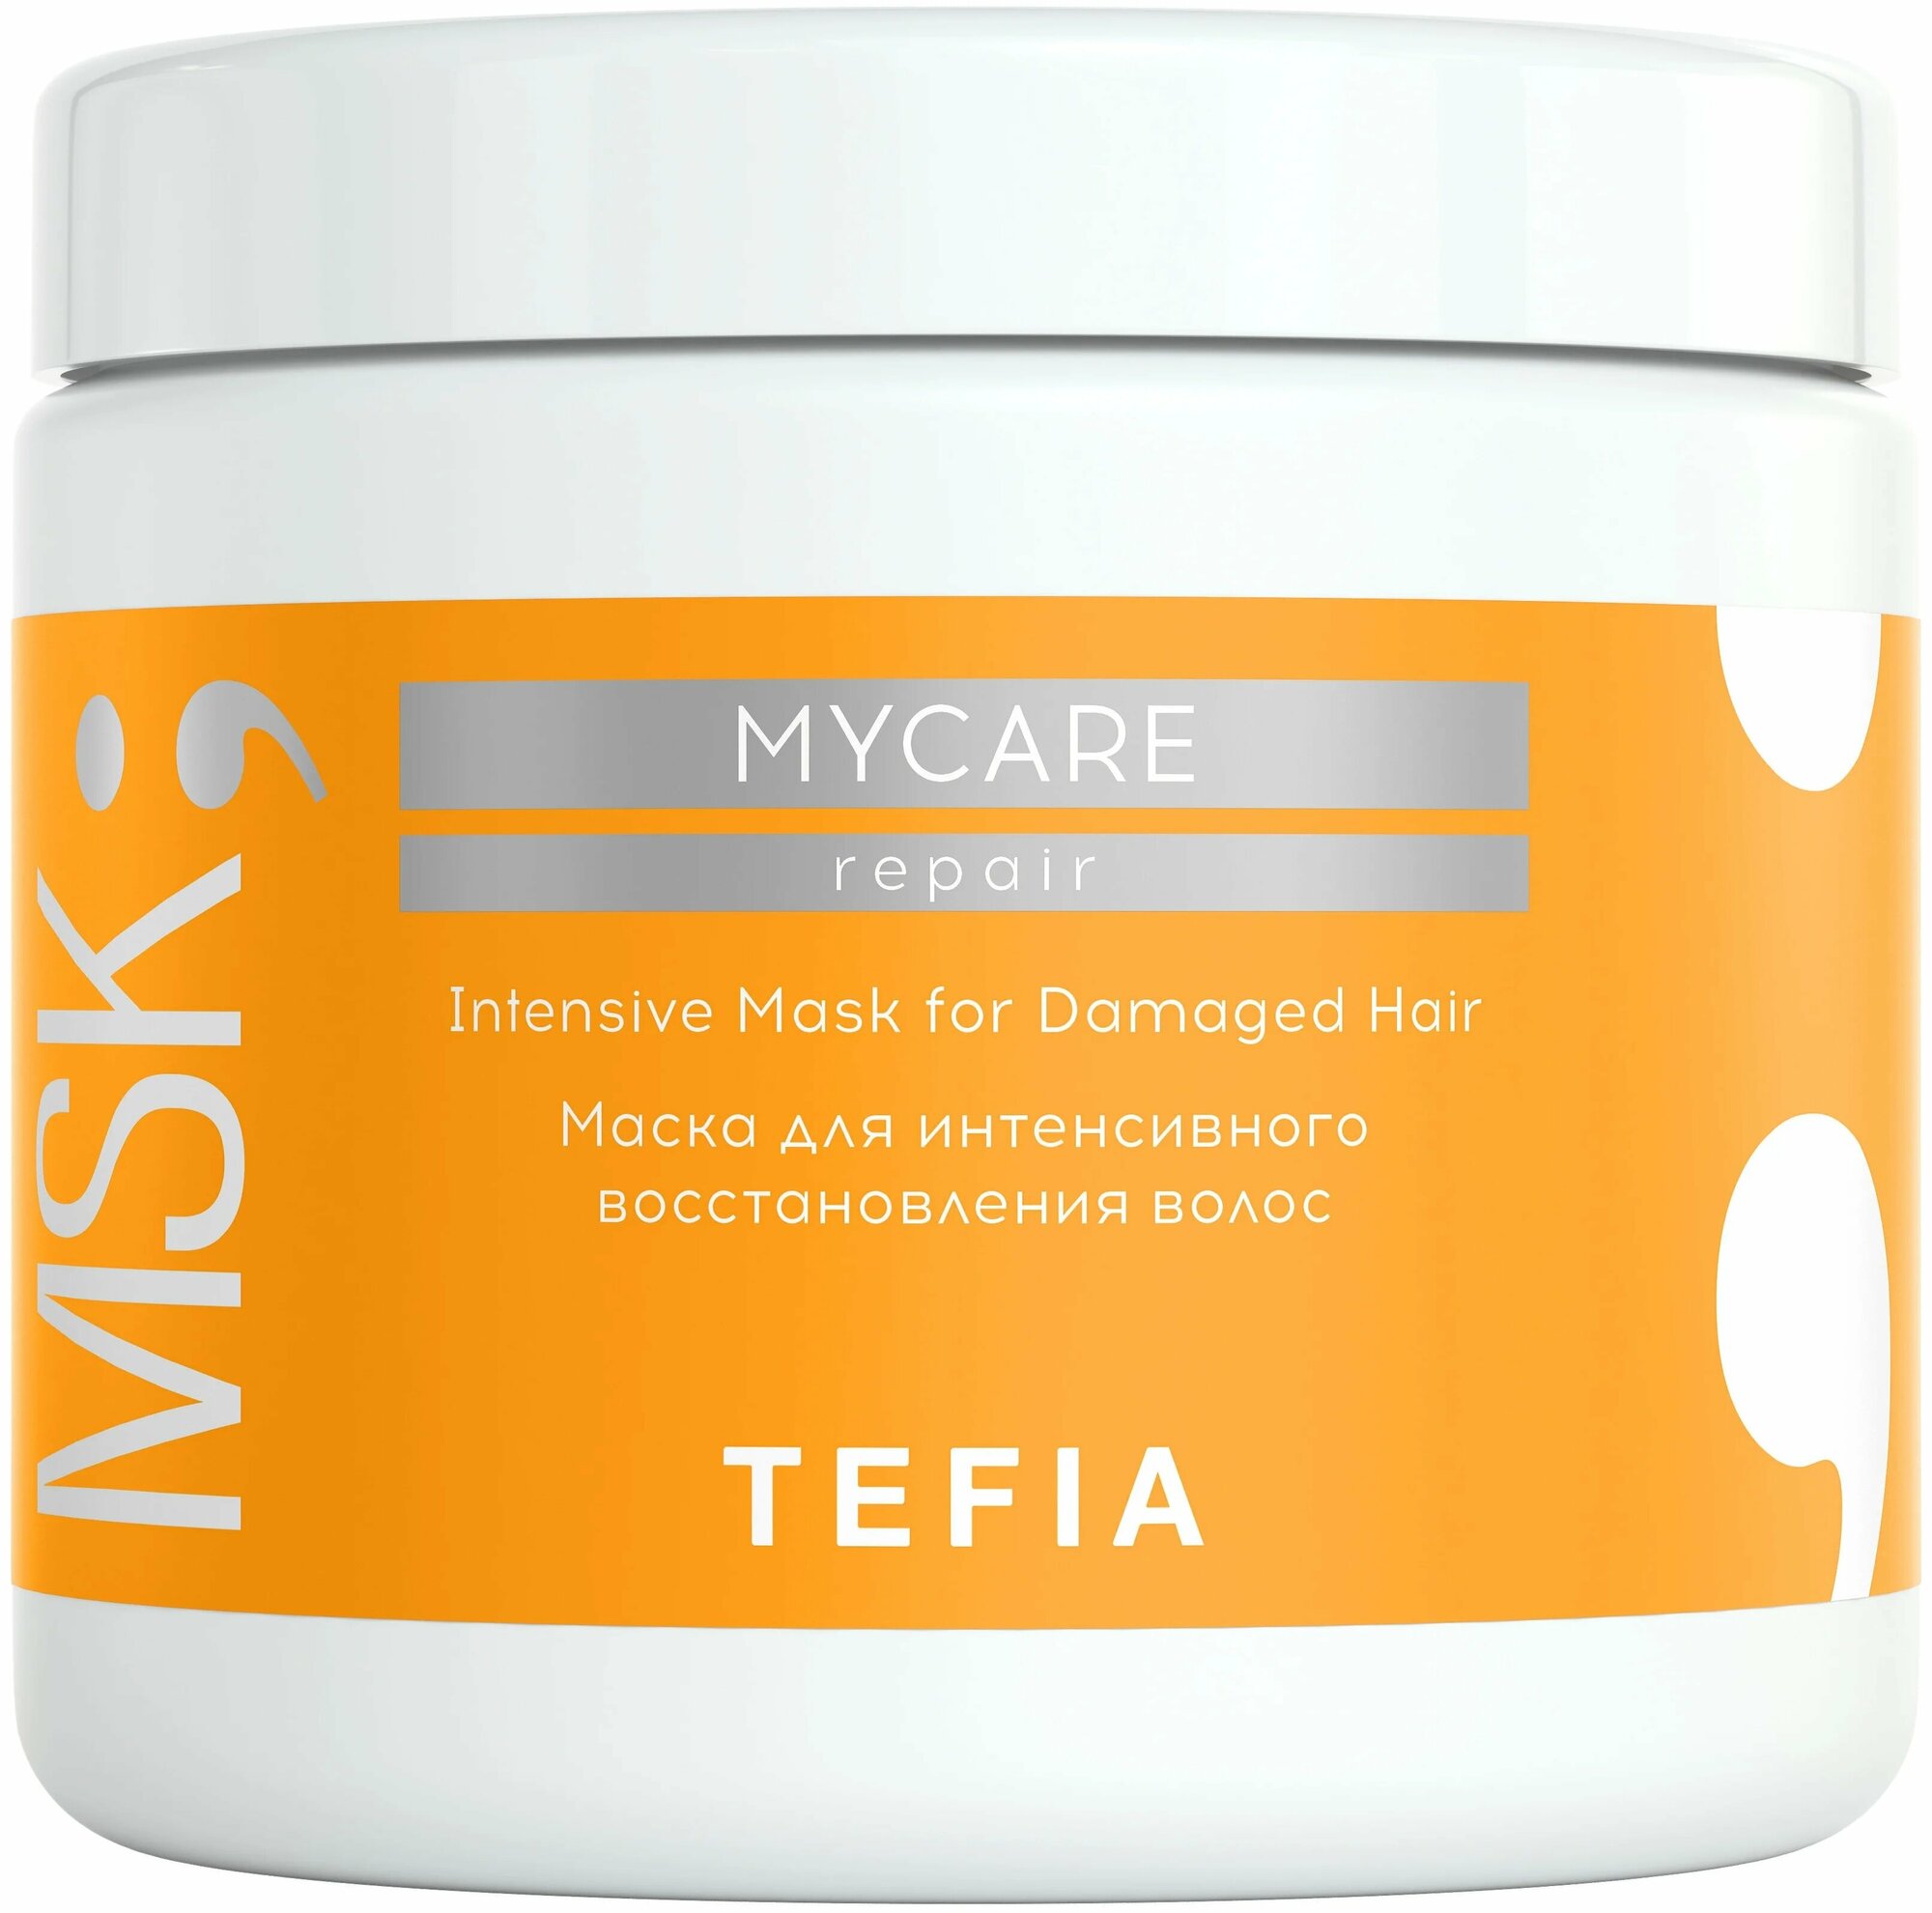 Tefia MyCare Repair Intensive Mask for Damaged Hair Маска для интенсивного восстановления волос, 250 г, 250 мл, банка